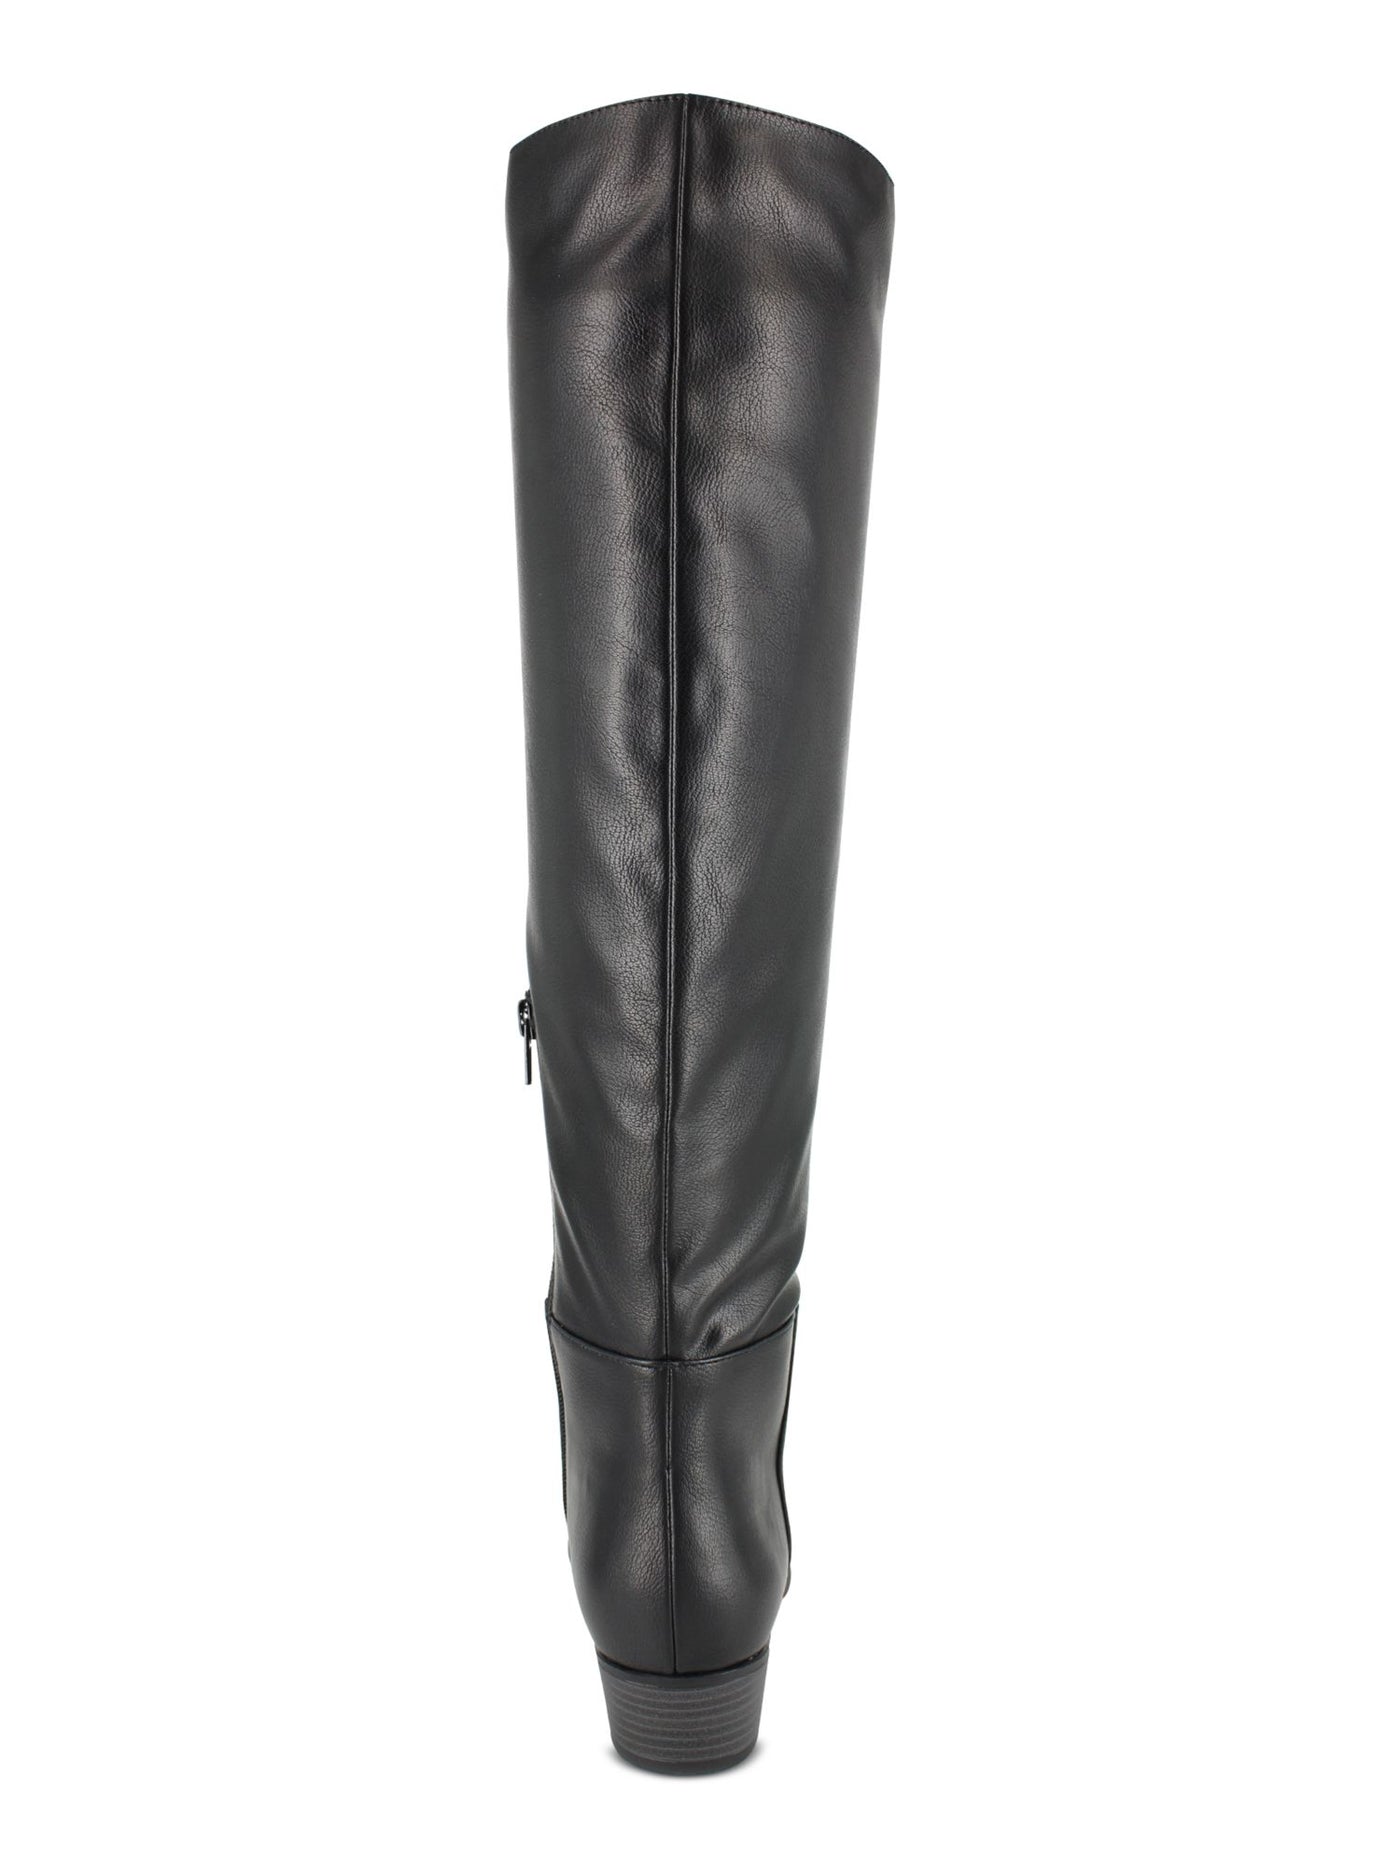 ESPRIT Womens Black Cushioned Slip Resistant Treasure Almond Toe Block Heel Zip-Up Heeled Boots 8